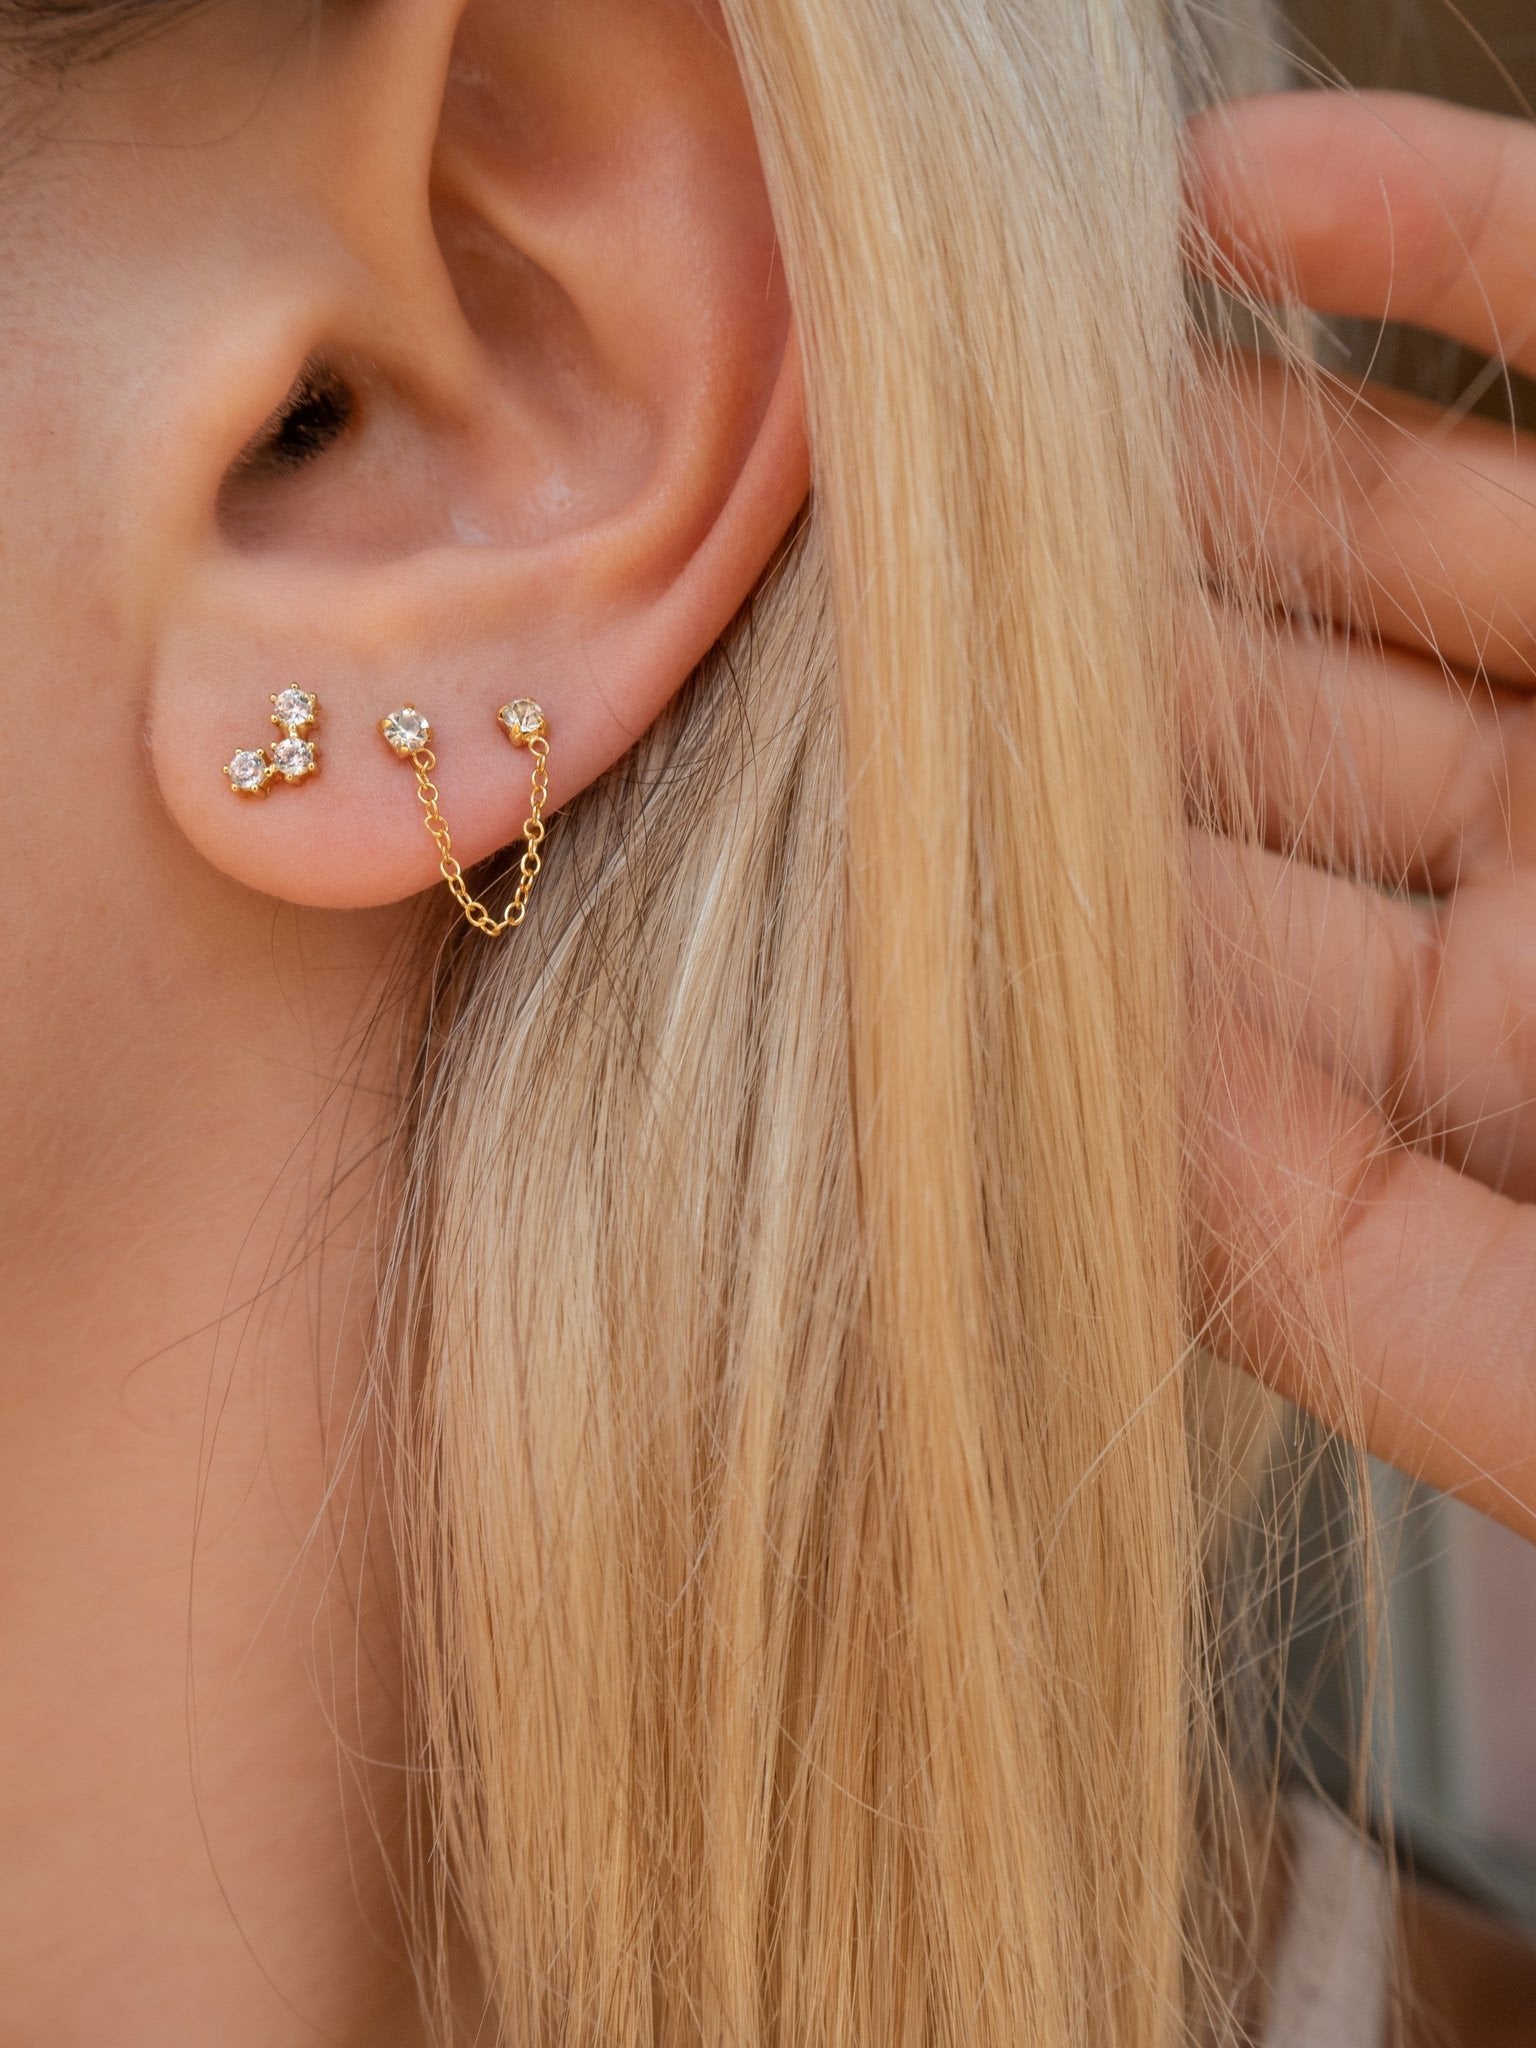 Share more than 260 ear piercing earrings gold